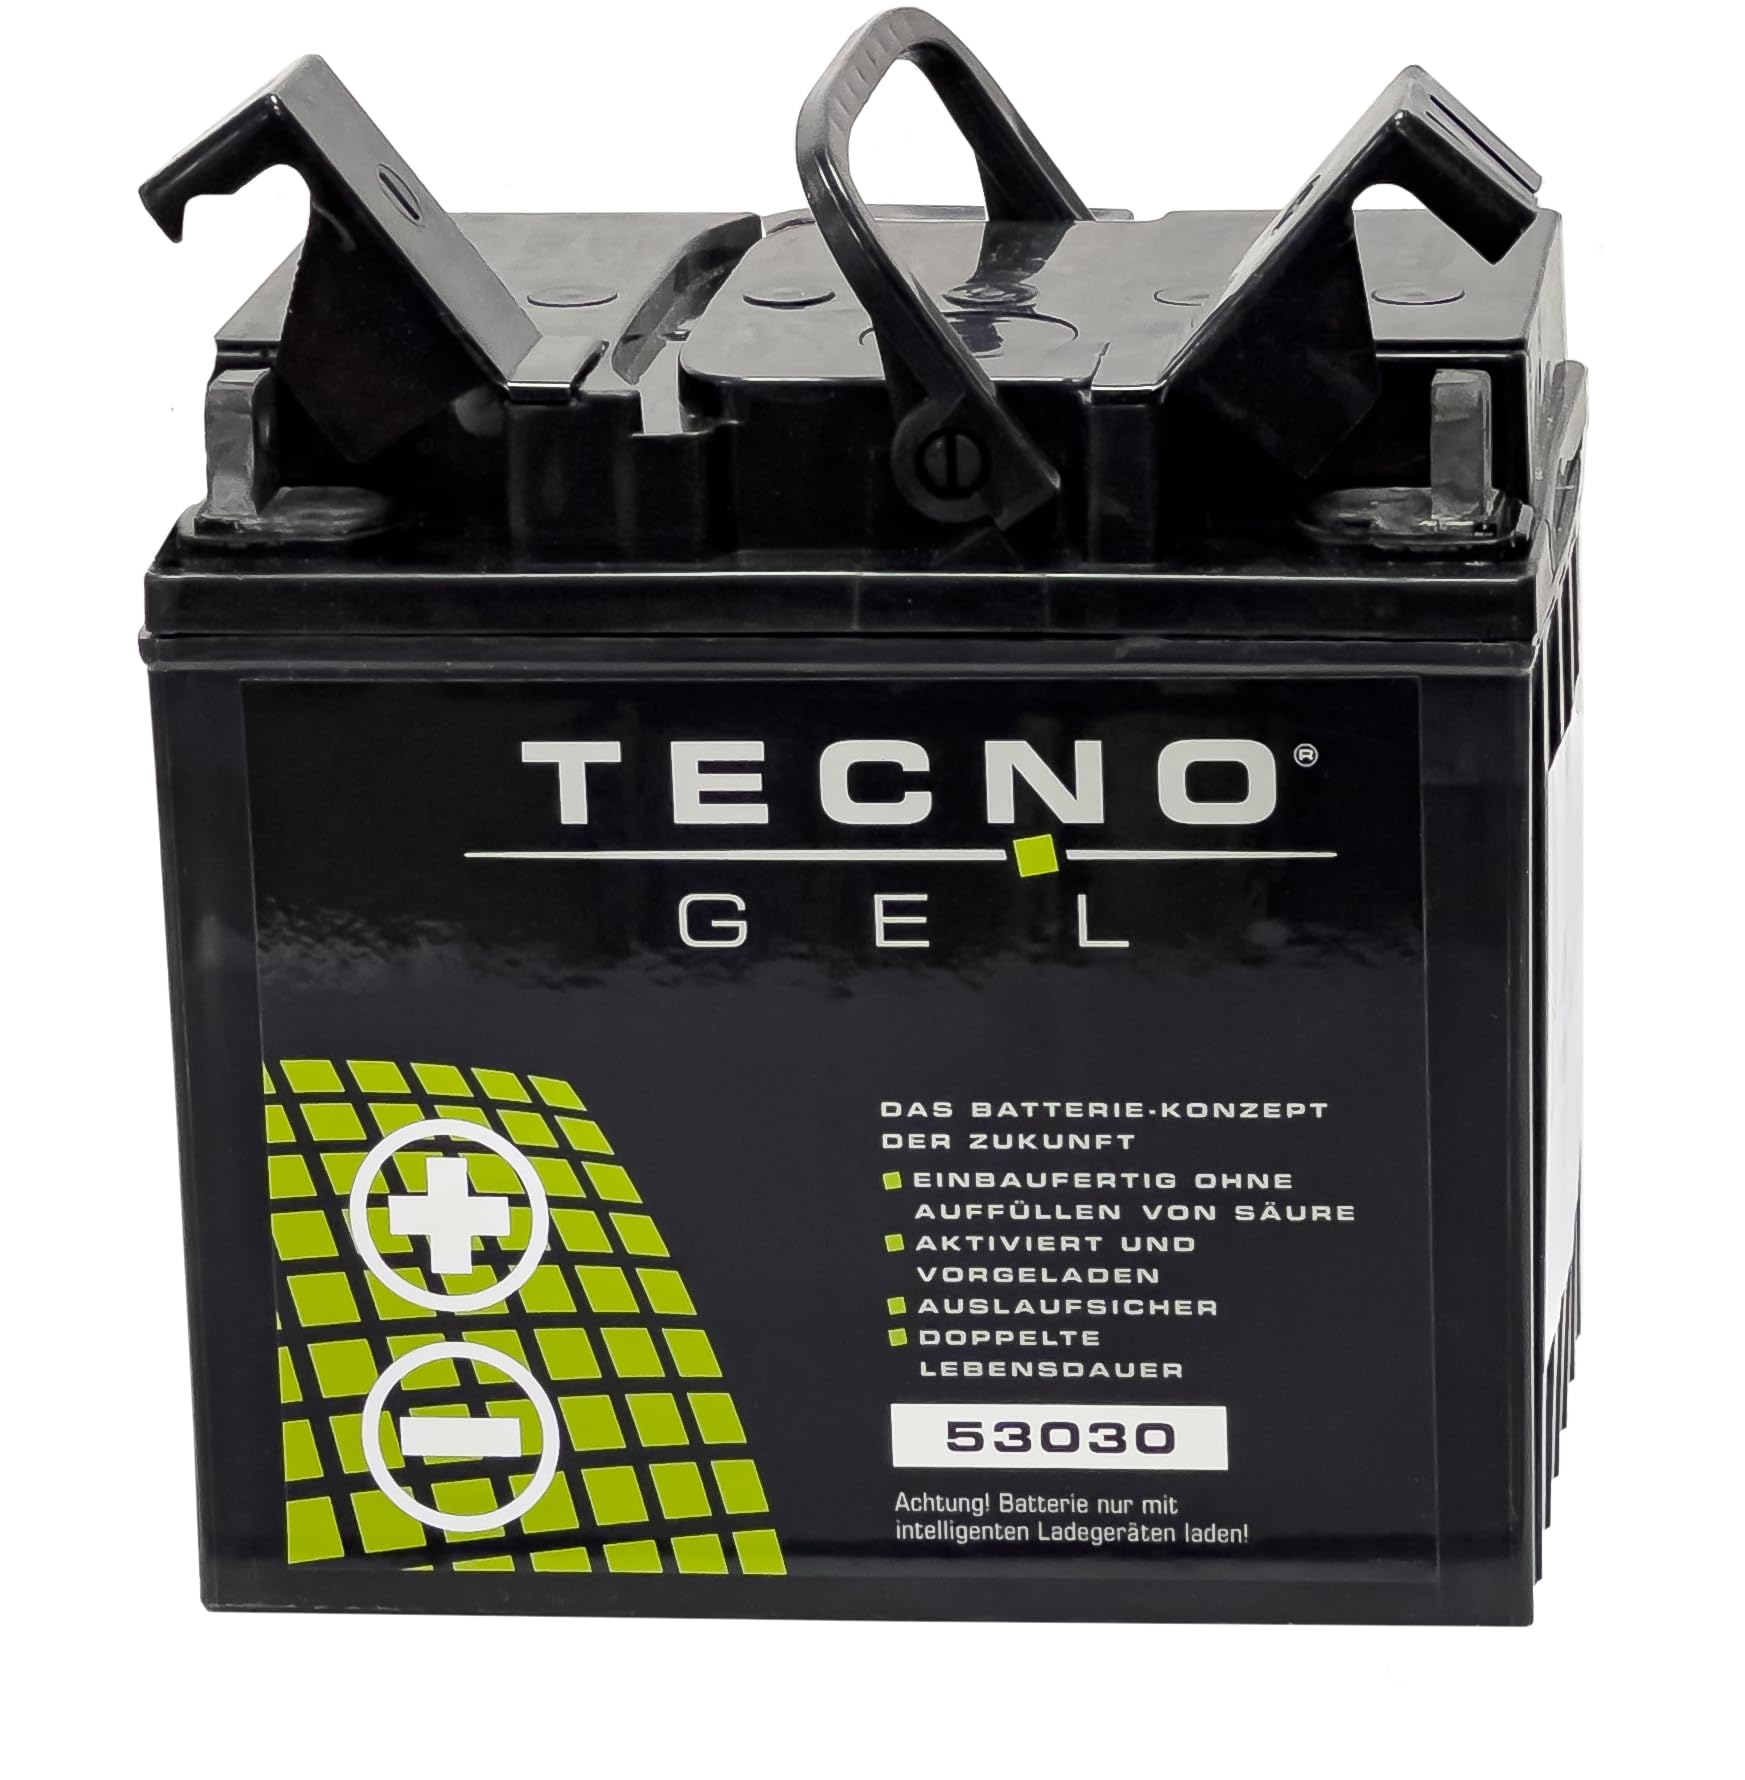 TECNO-GEL Motorrad Qualitäts Batterie 53030 für MOTO GUZZI California 1000 II, III, 1100 ie div., EV 1982-2011, 12V Gel-Batterie 30 Ah, 187x130x170 mm von Wirth-Federn